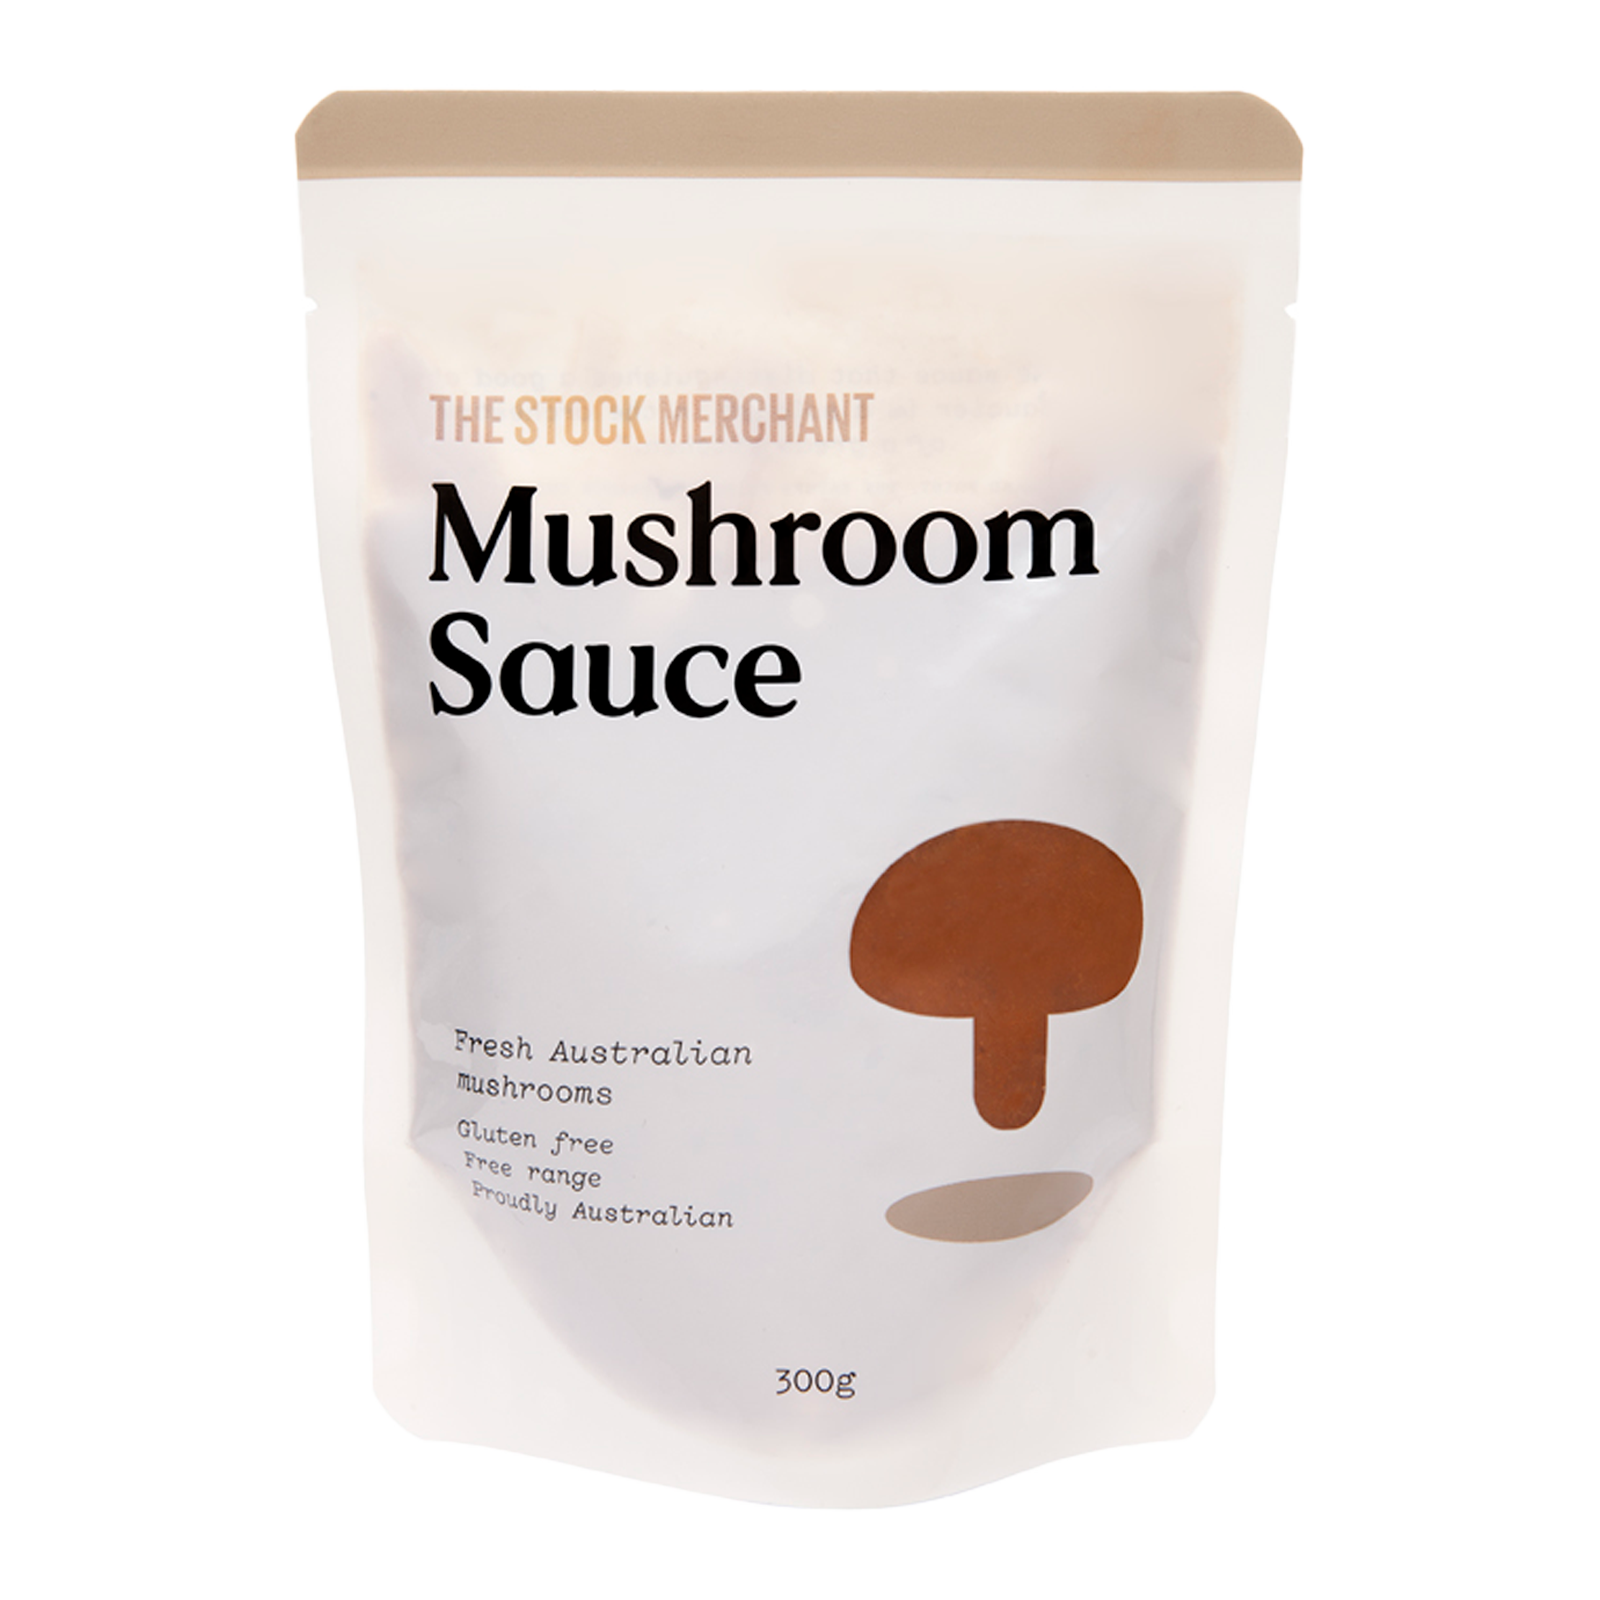 All-Natural Mushroom Sauce from Australia (300g) - Horizon Farms